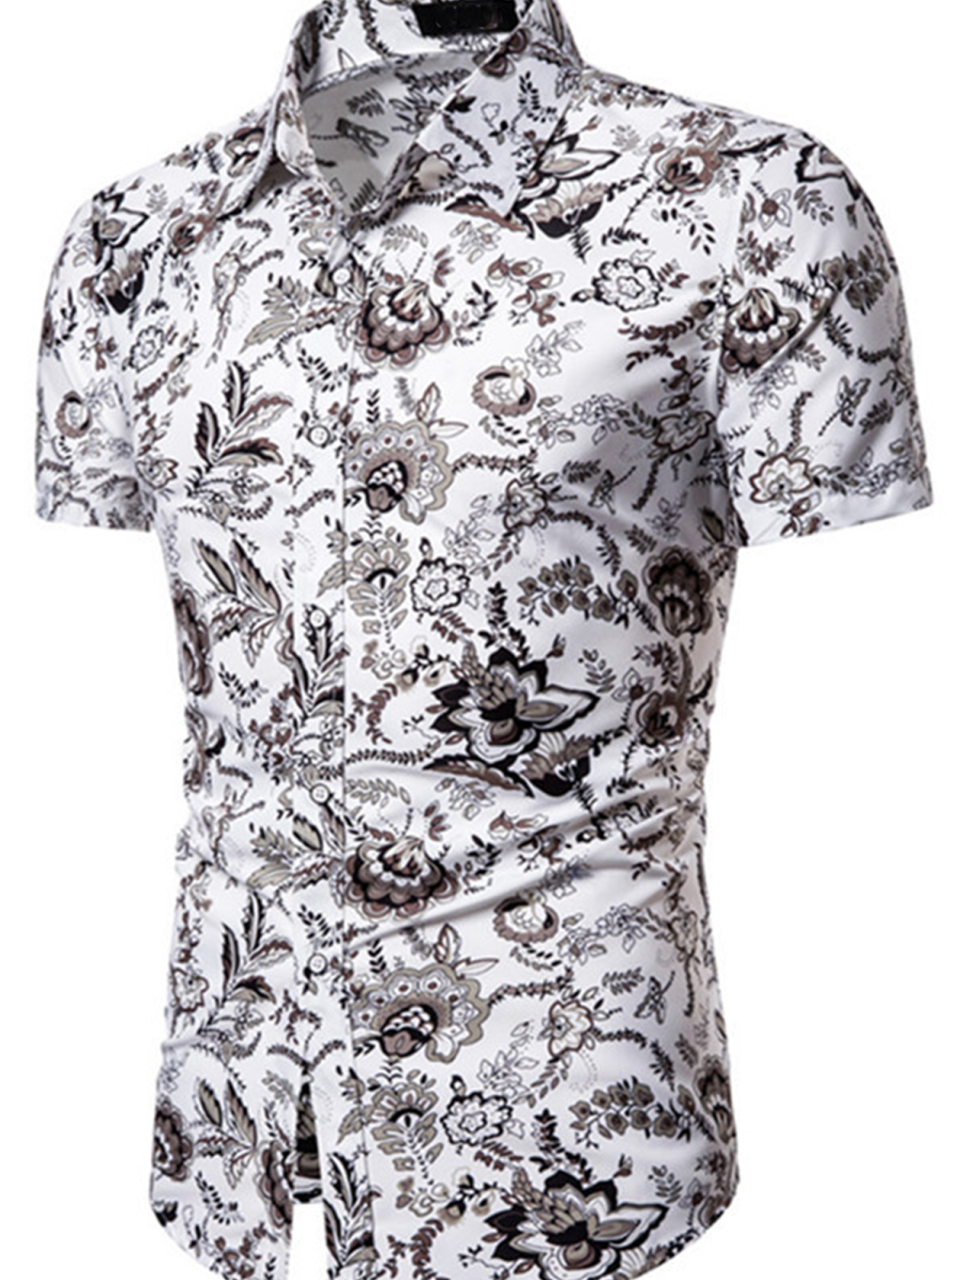 Men's Summer Fashion Short Sleeve Printed Shirt